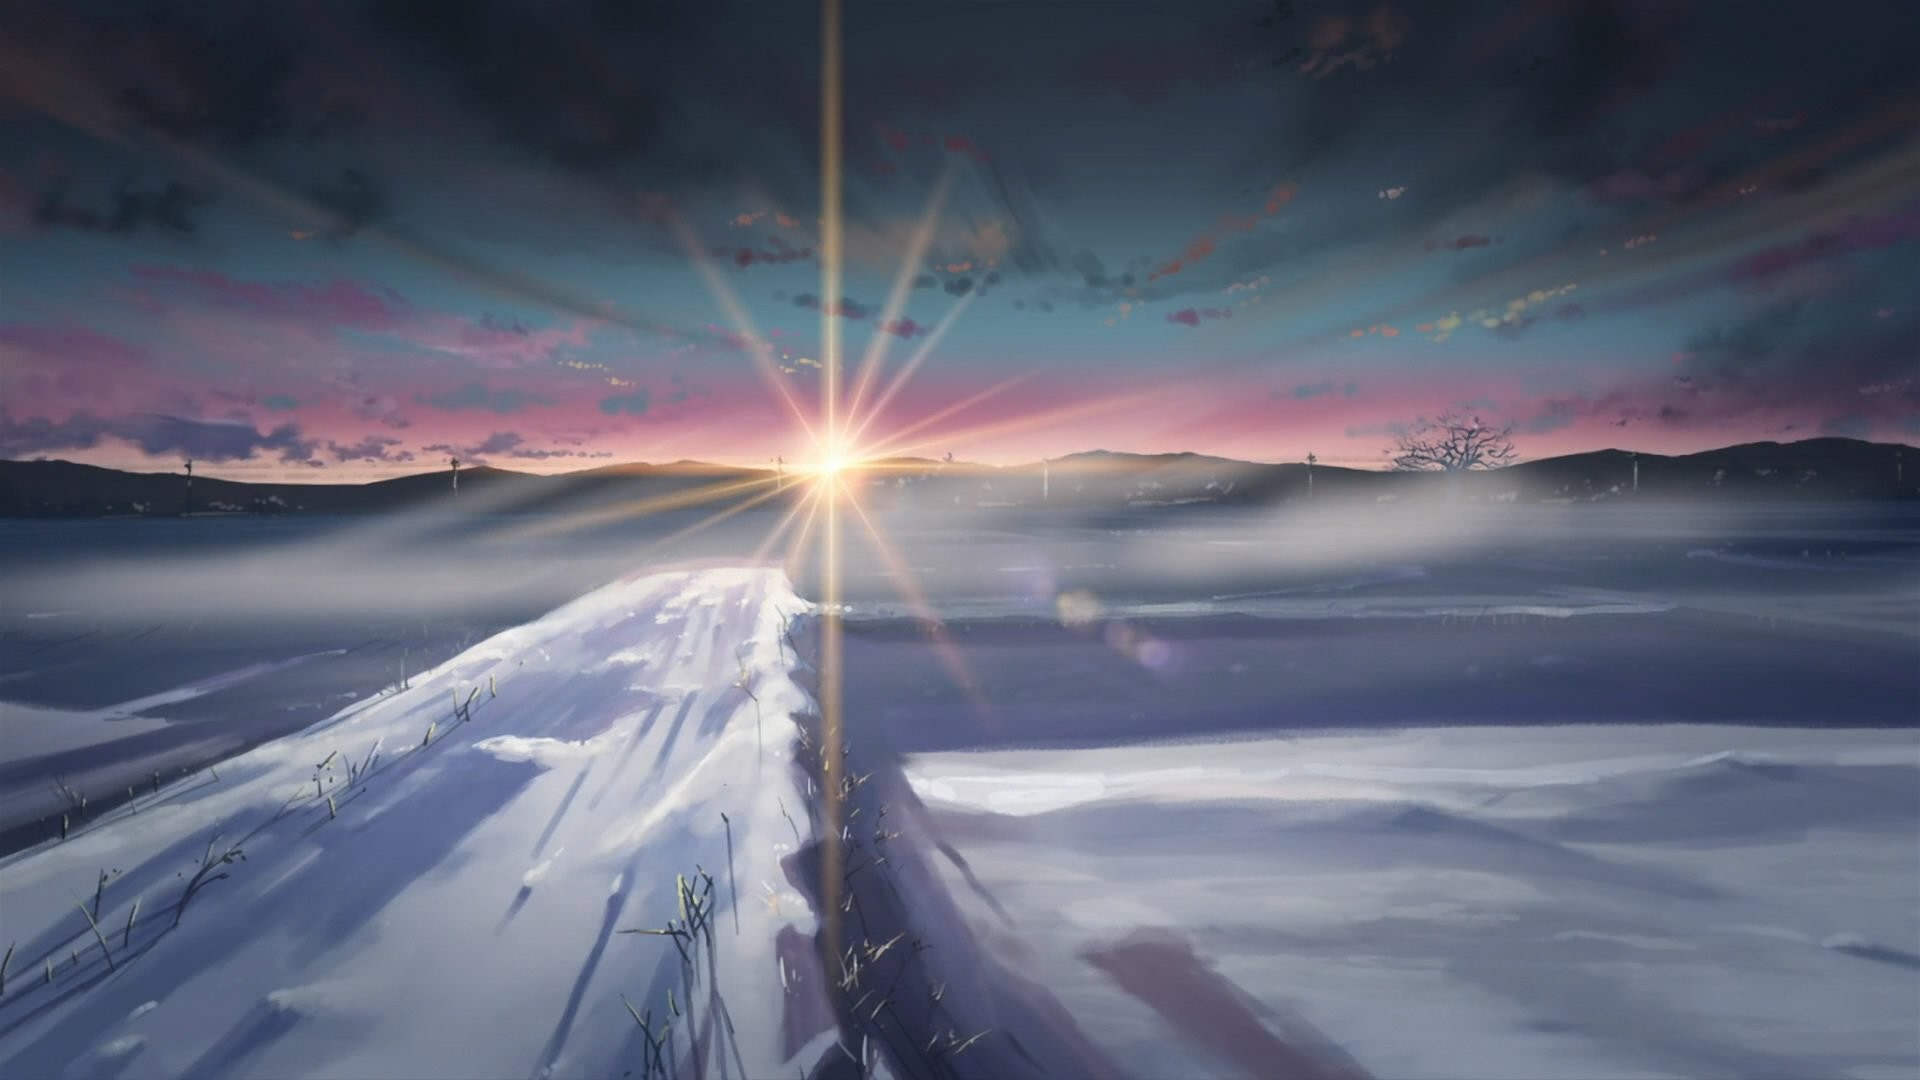 Anime 1920x1080 nature landscape sunlight artwork winter snow ice cold outdoors sky